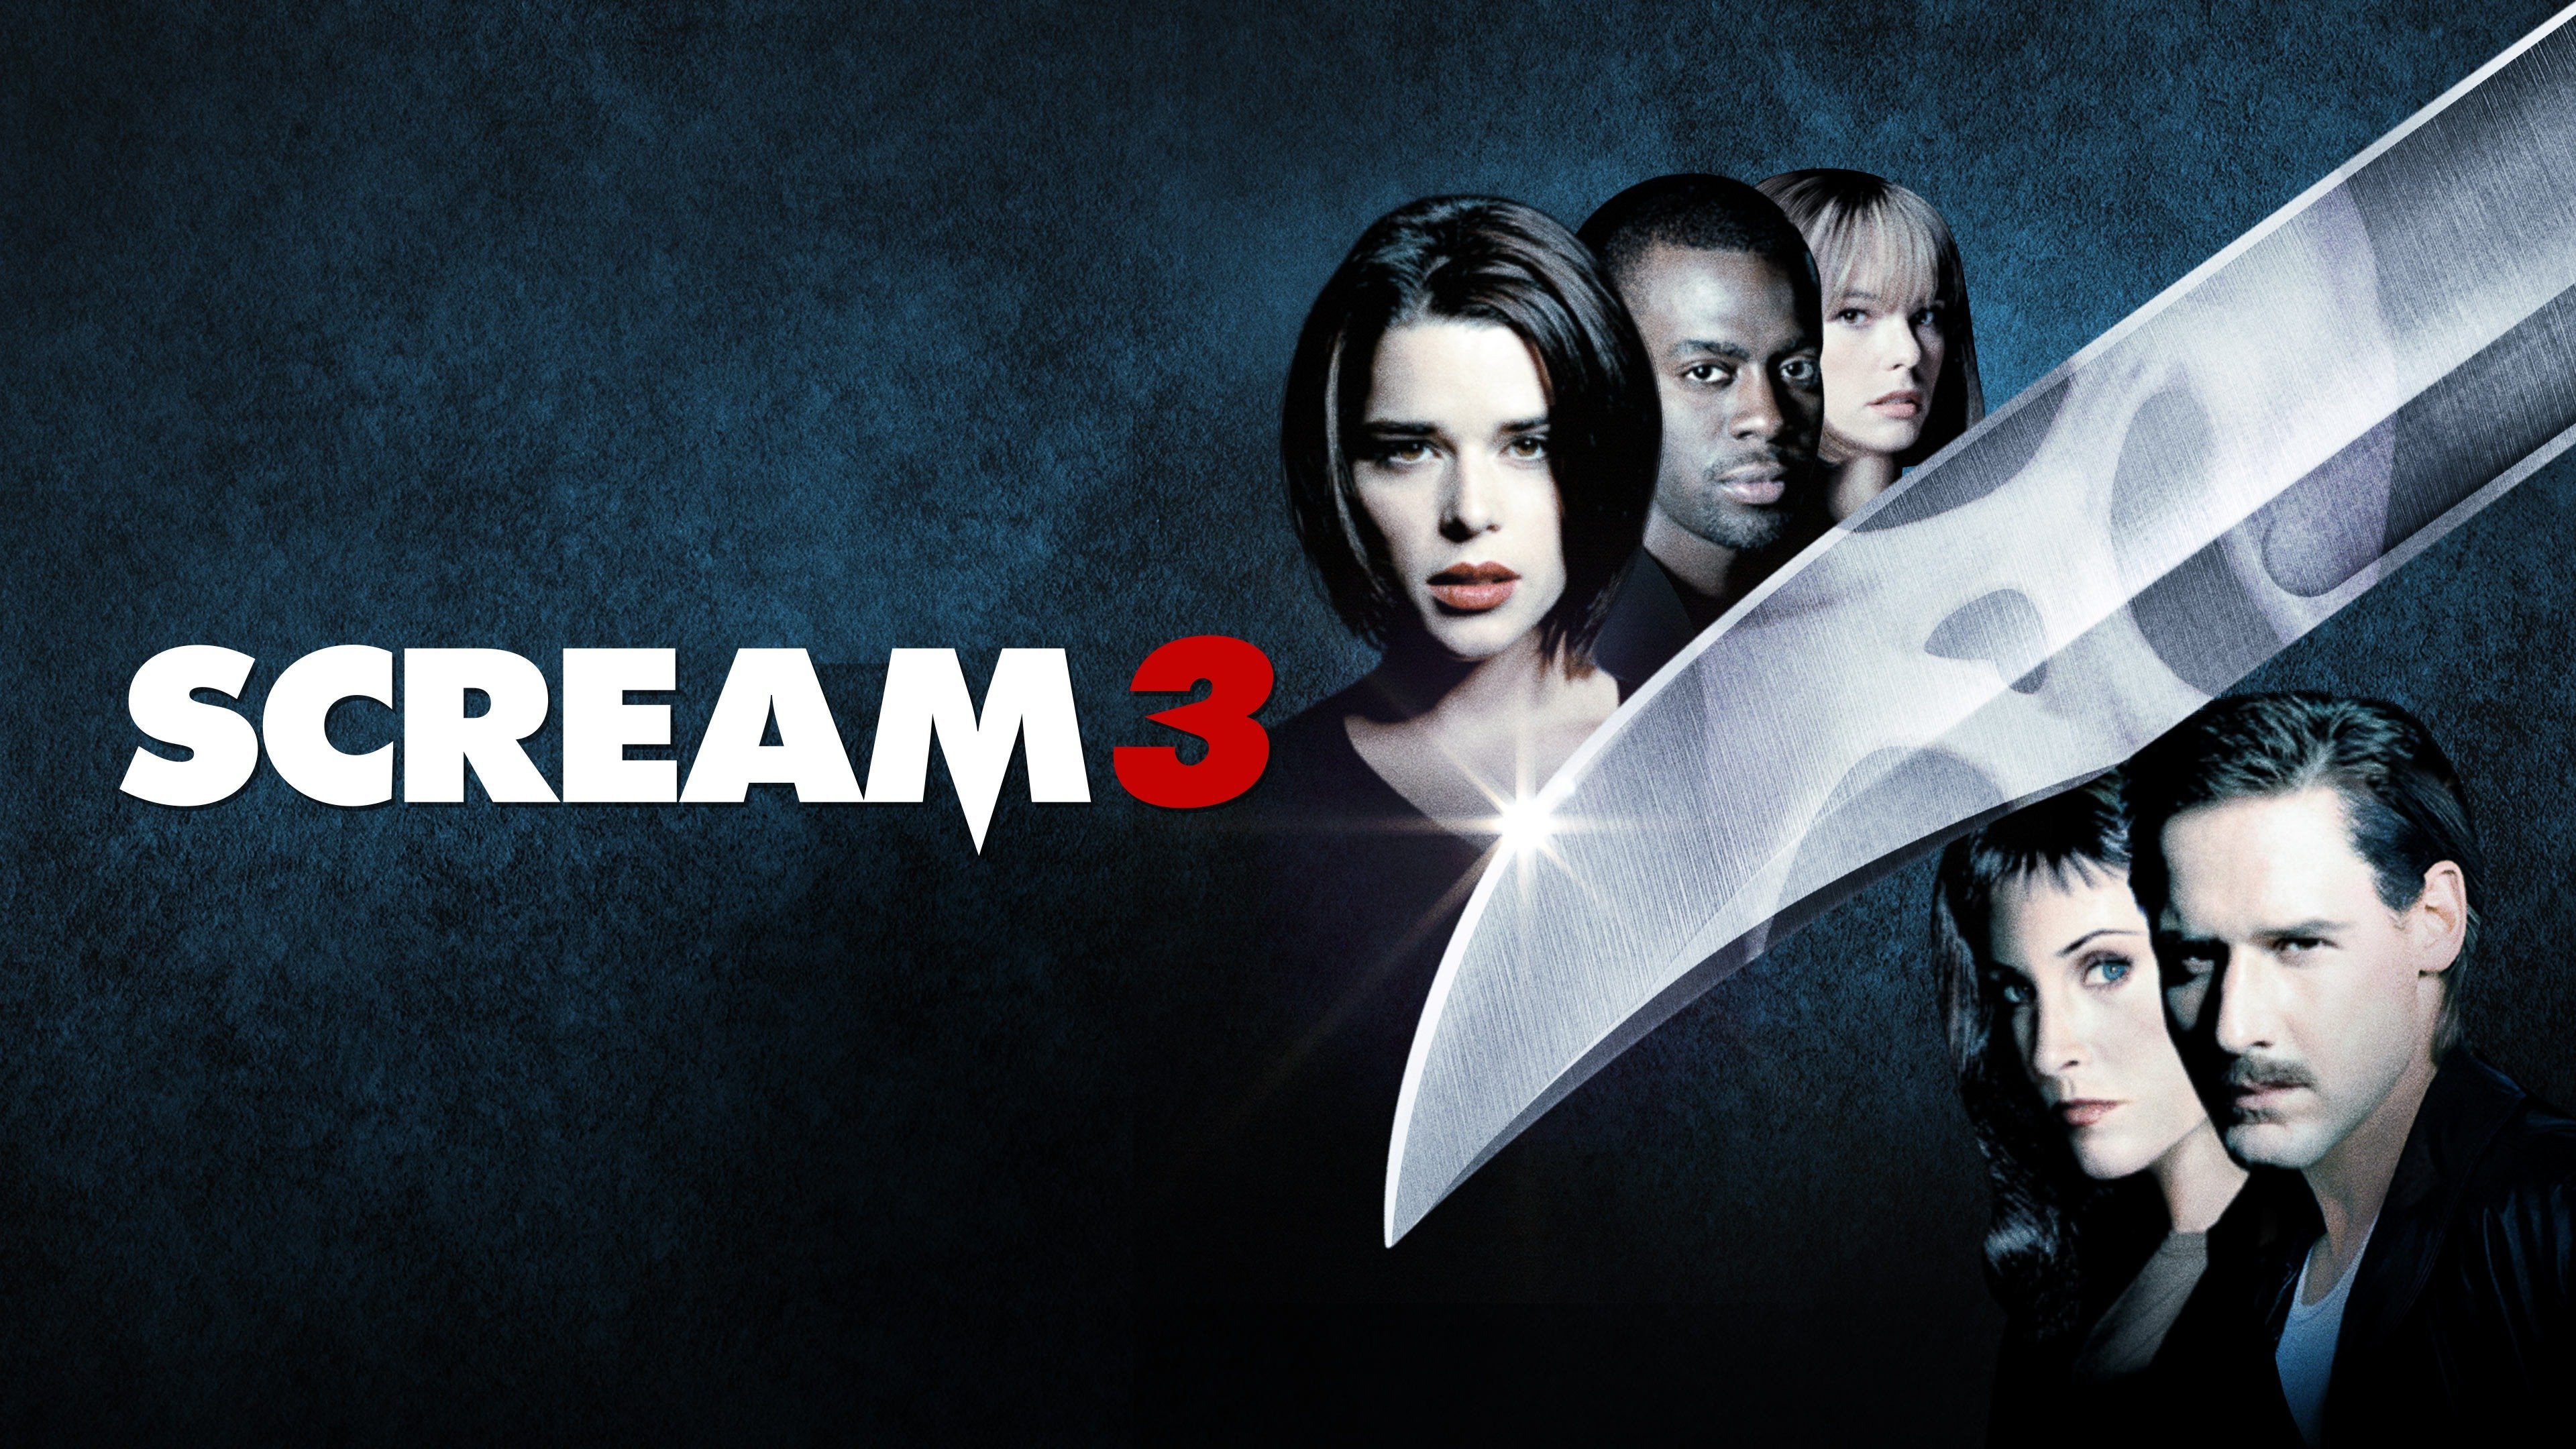 Scream 6 2023 Movie Posters, Scream IV, Neve Campbell, Courteney Cox, David Arquette, Jenna Ortega, Hayden Panettiere, Melissa Barrera, Horror Movie Posters